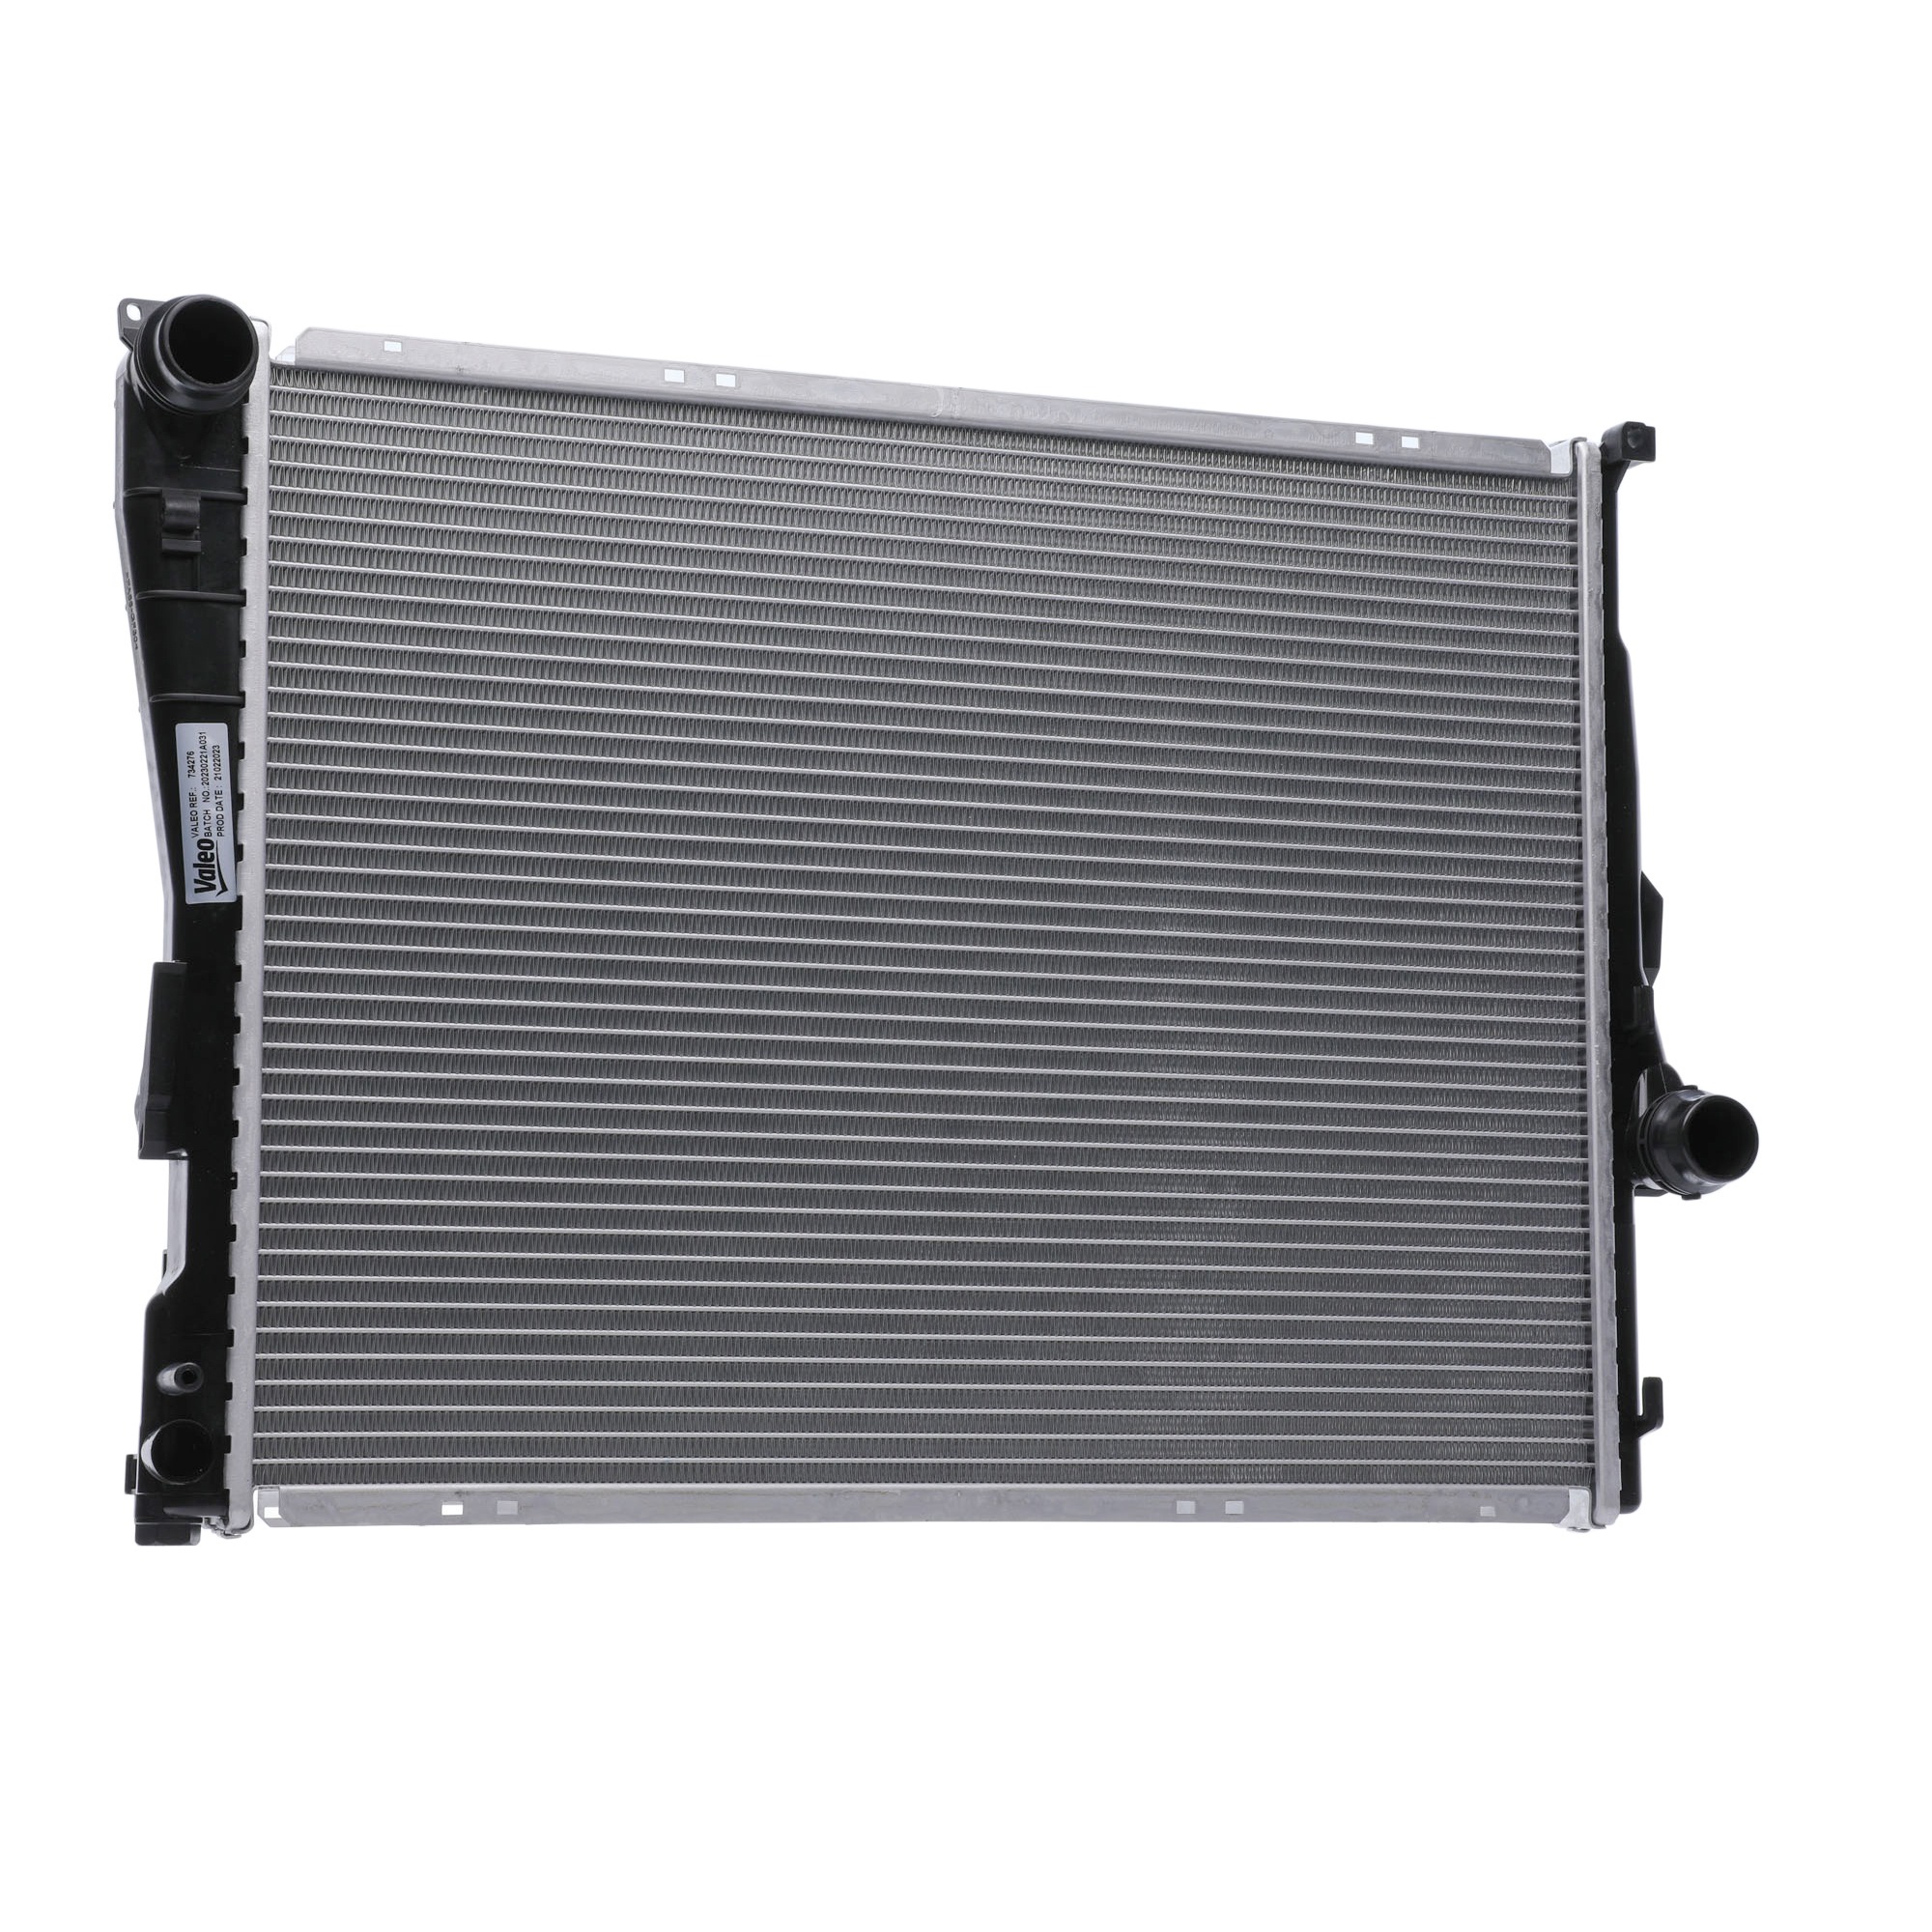 VALEO Aluminium, 445 x 580 x 32 mm, Brazed cooling fins Radiator 734276 buy